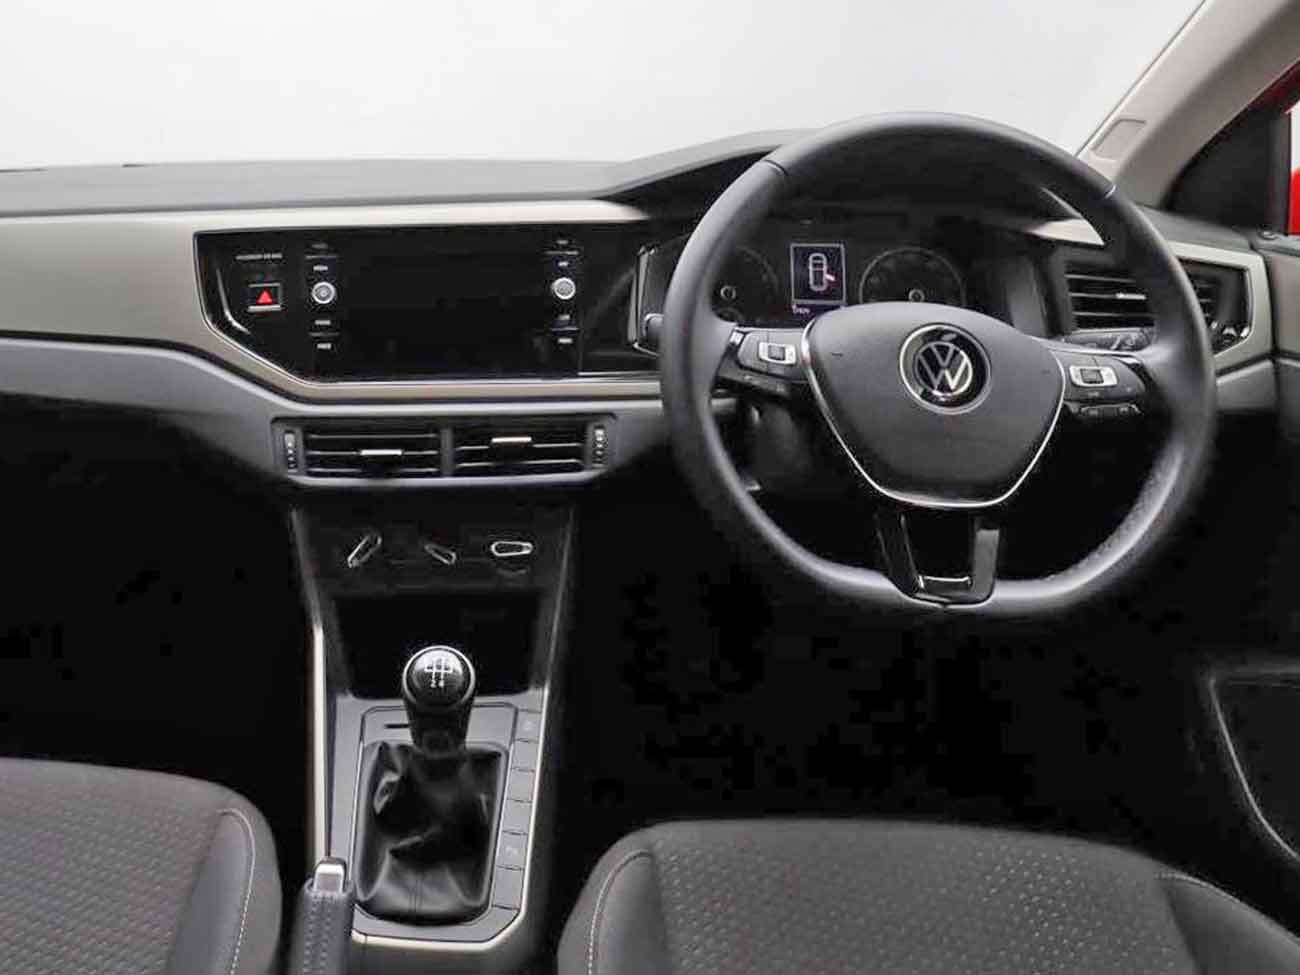 Interior view of Volkswagen Polo